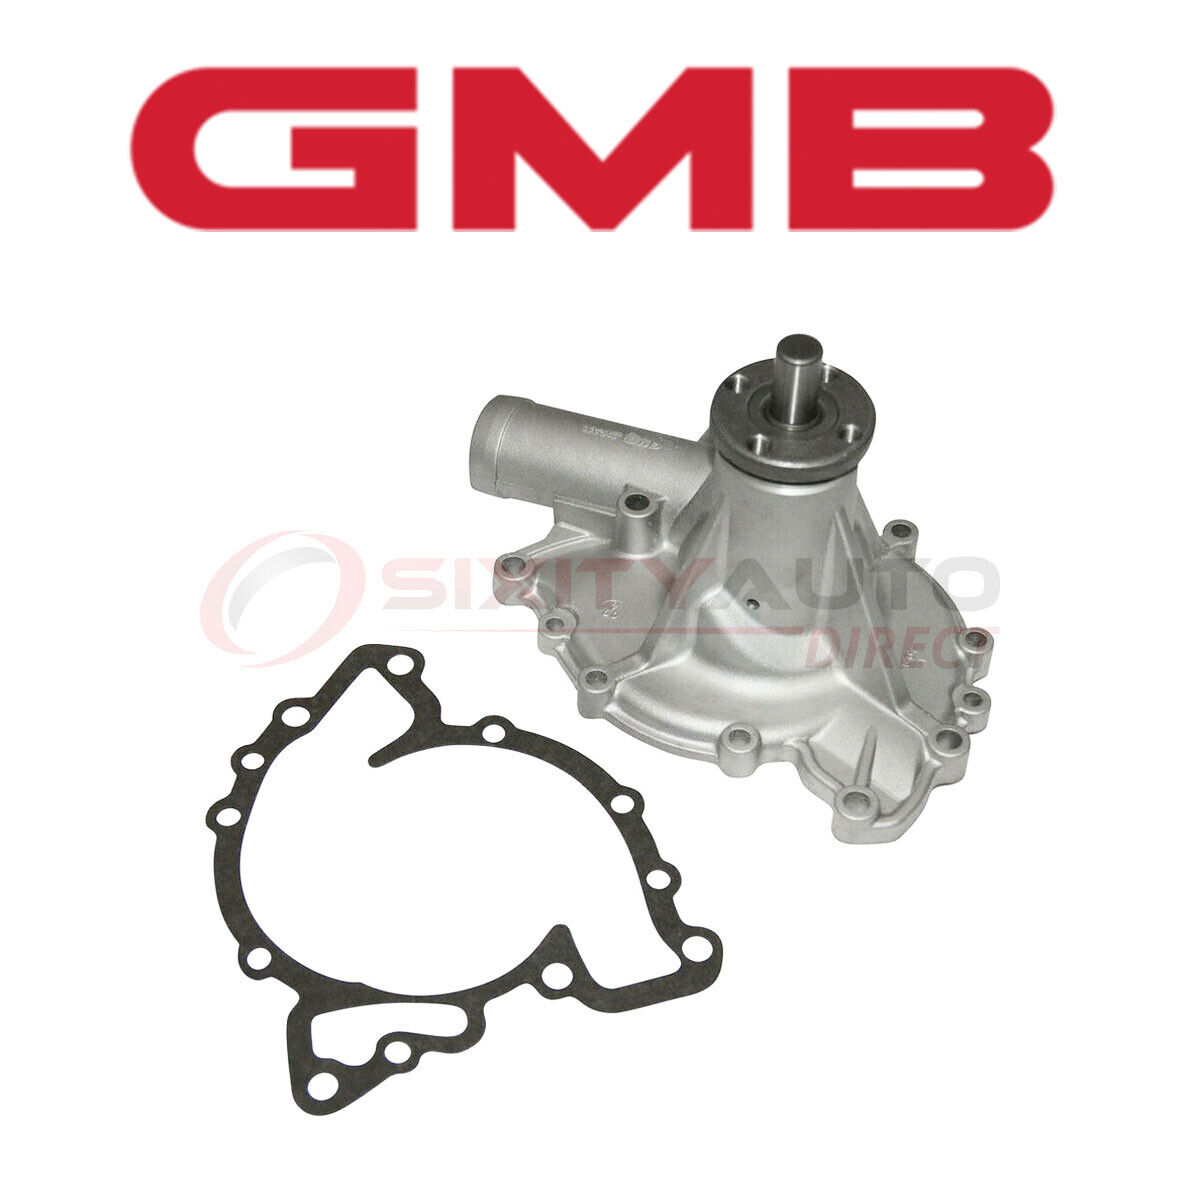 GMB Water Pump for 1978-1987 Oldsmobile Cutlass Salon 3.8L V6 – Engine gx